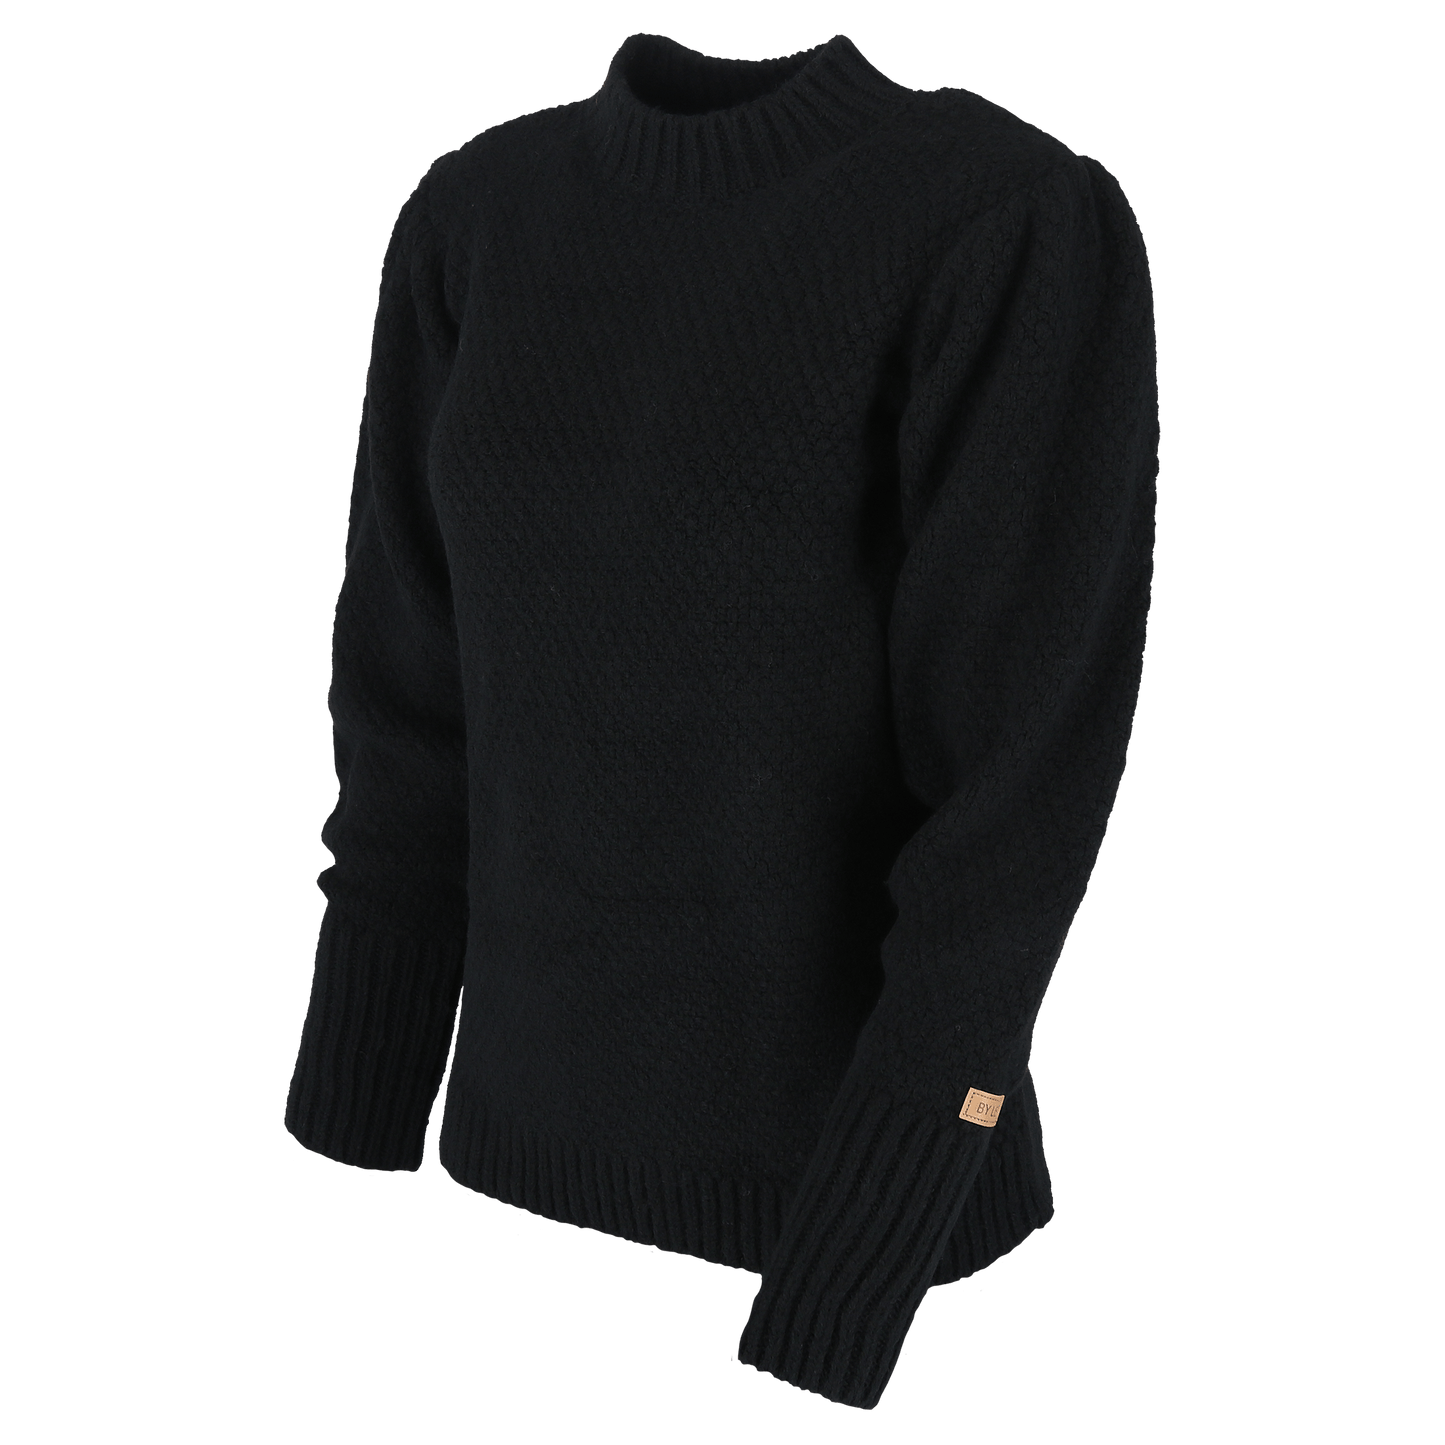 ByLien-Shop Chunky Sweater - Black Onyx